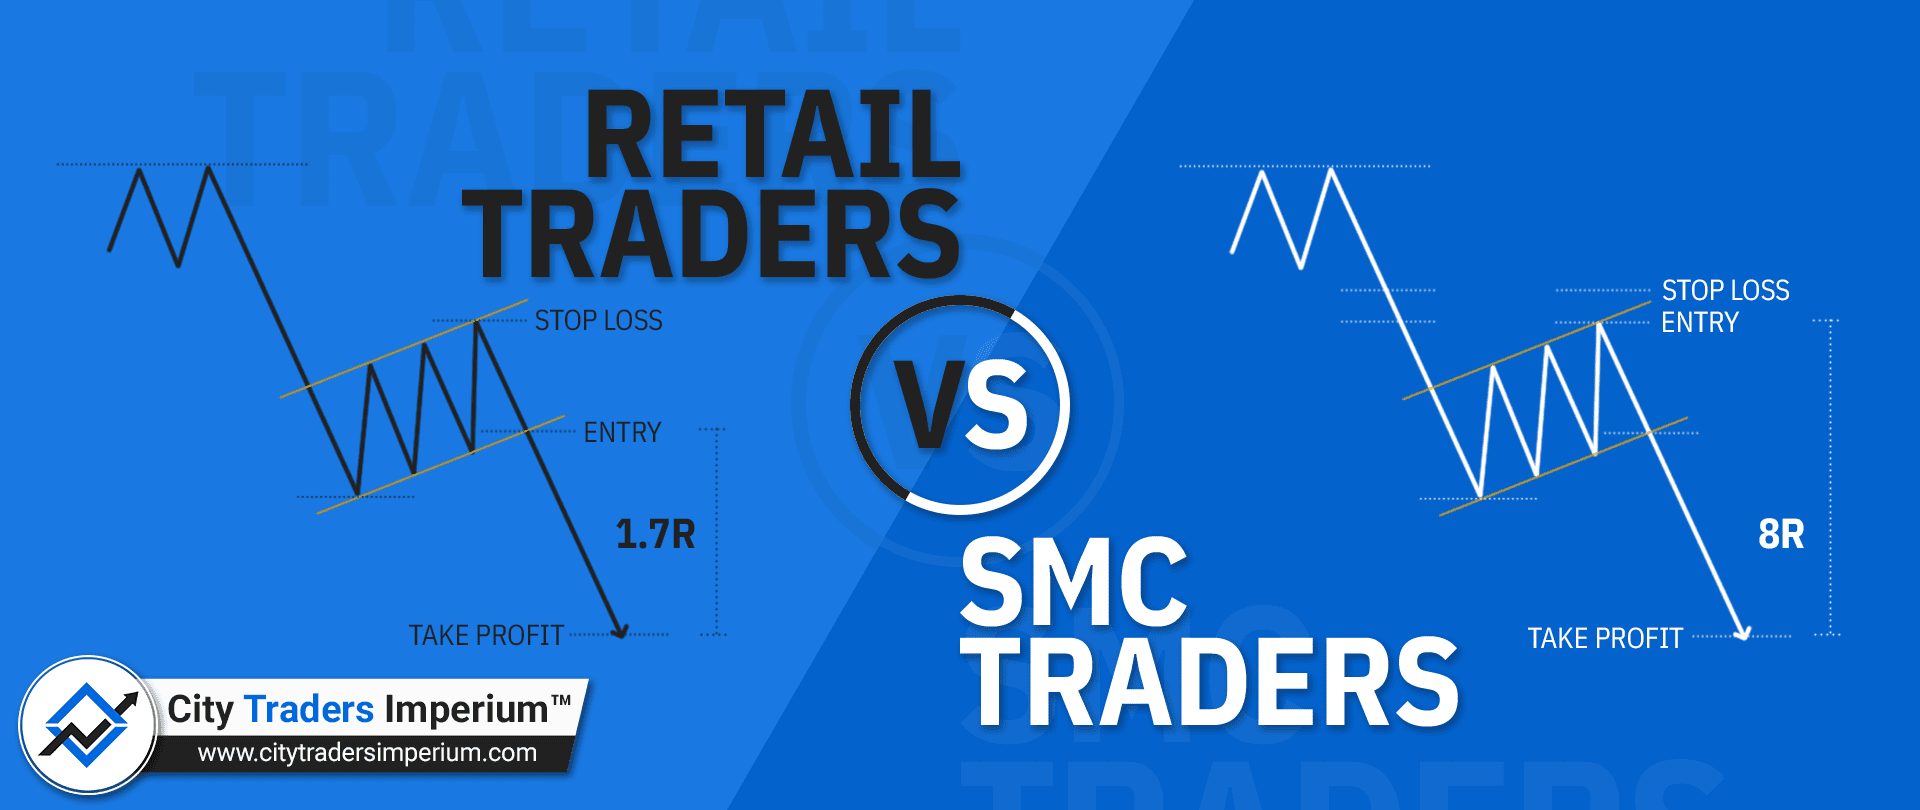 Bear Flag vs Bull Flag Patterns - Retail Traders Logic vs Smart Money Concepts Logic